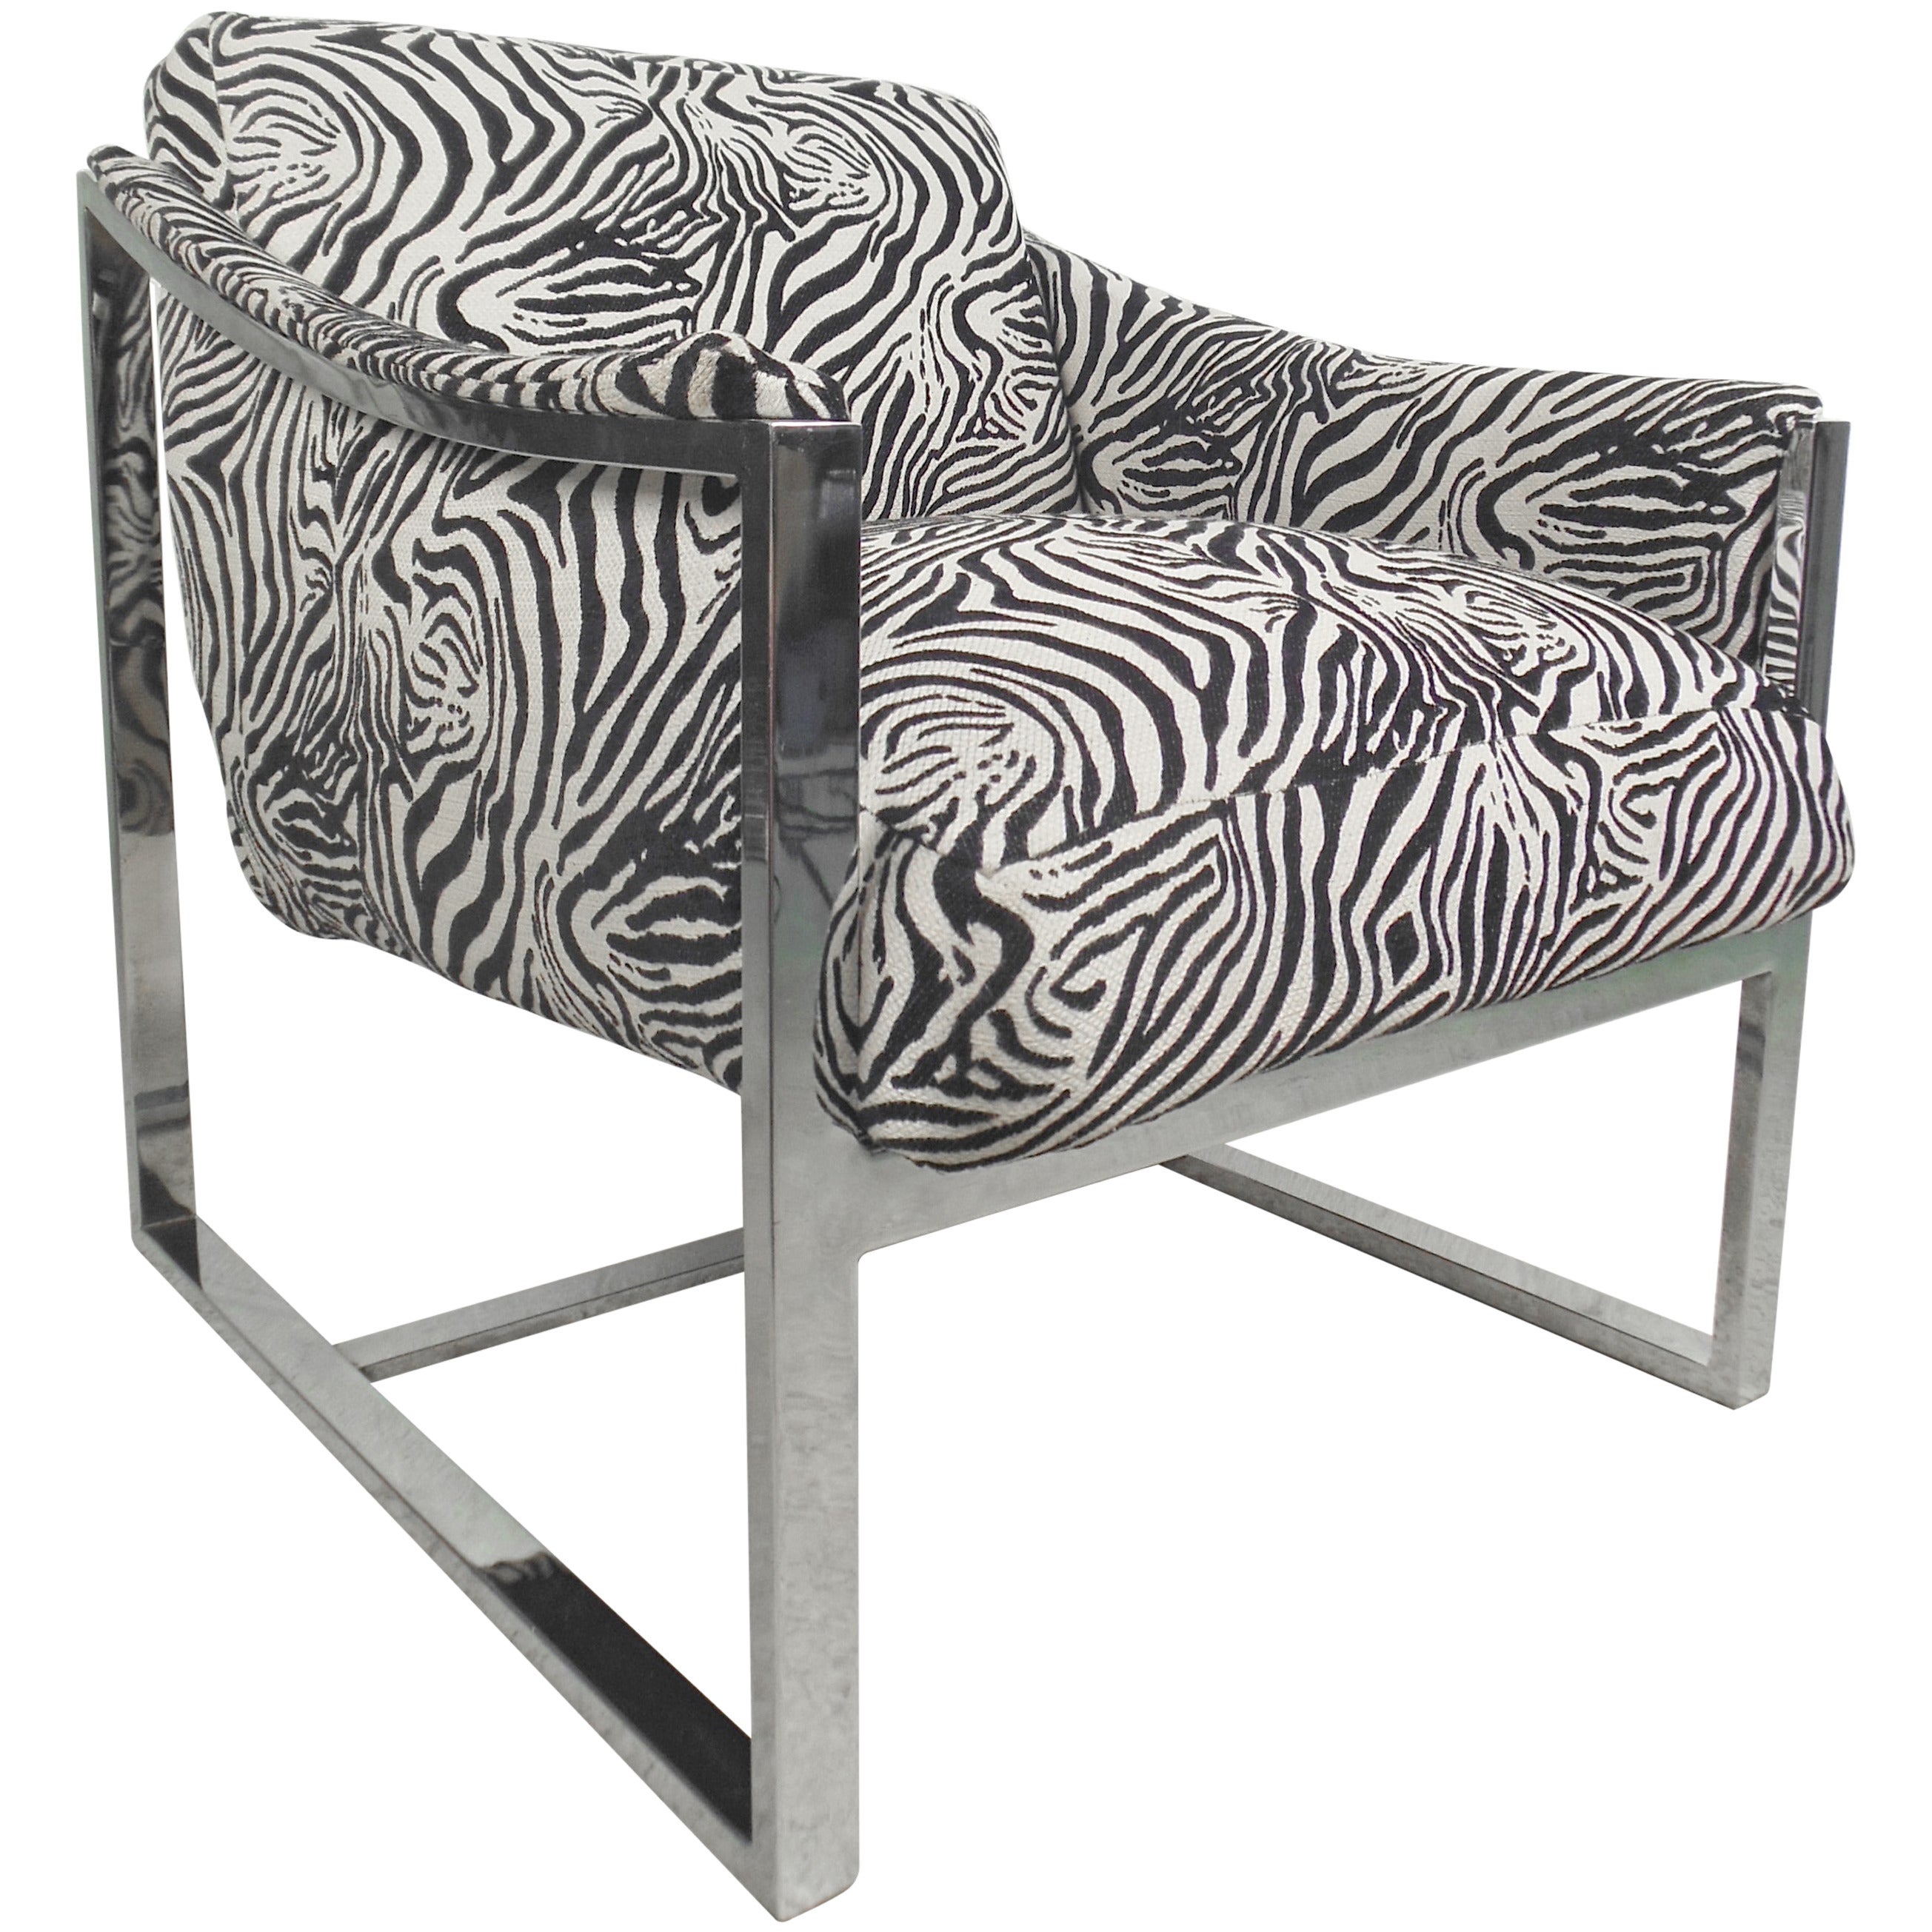 Vintage Chrome Lounge Chair with Zebra Print